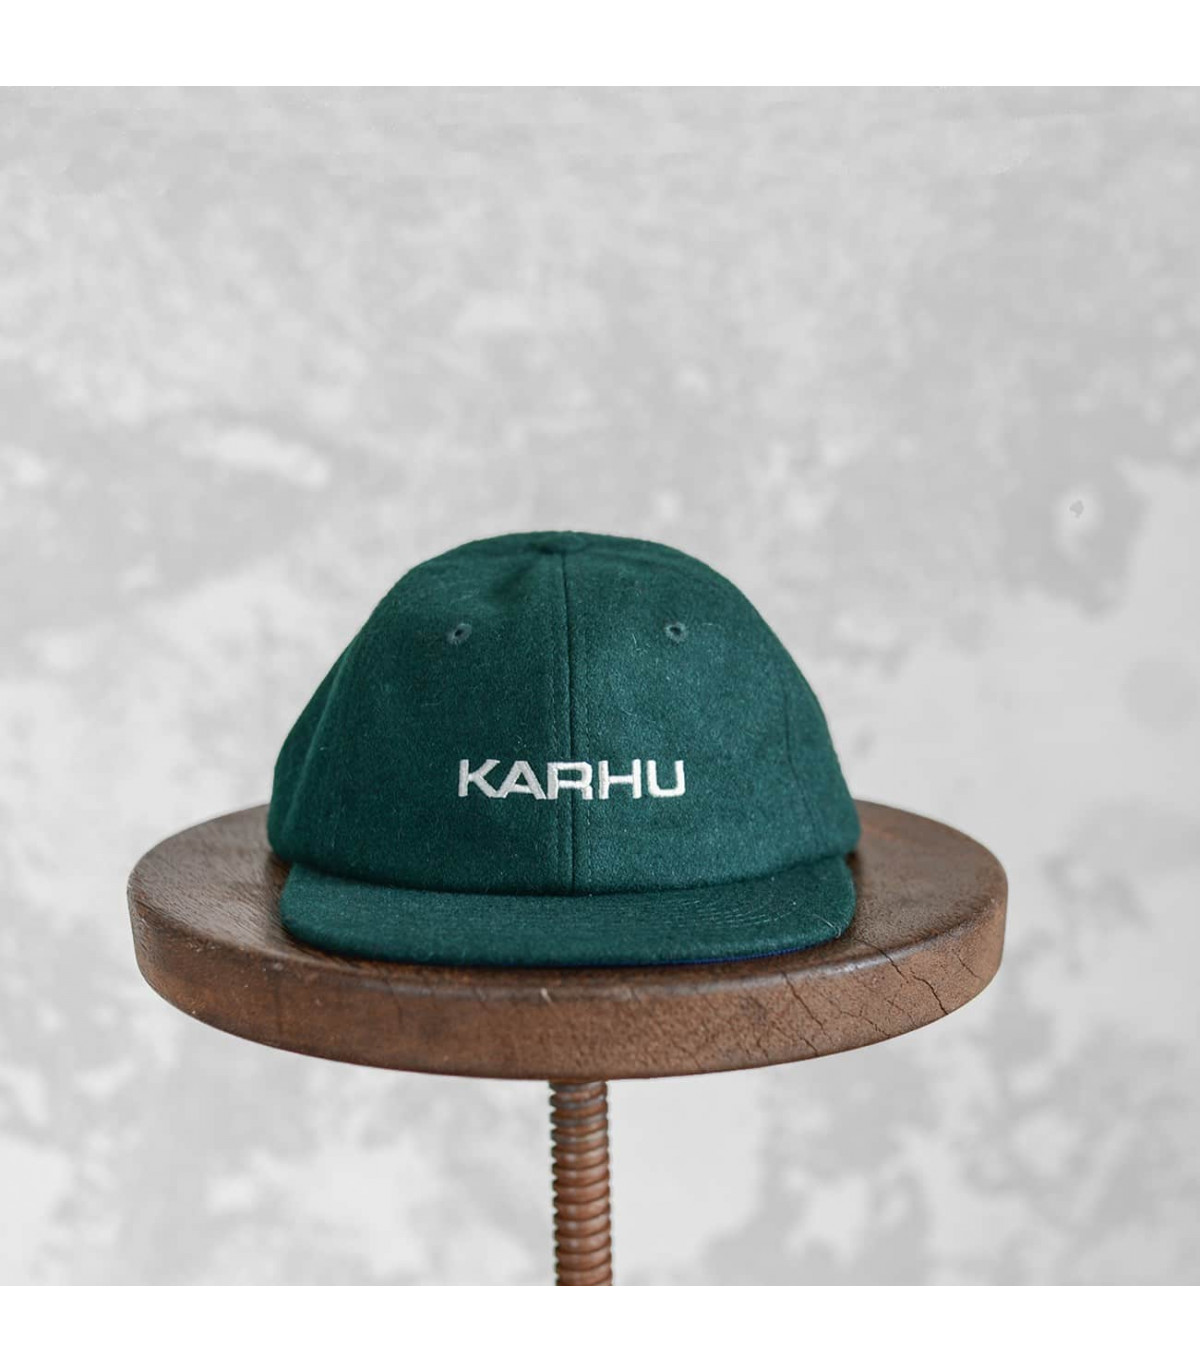 Karhu logo Cap